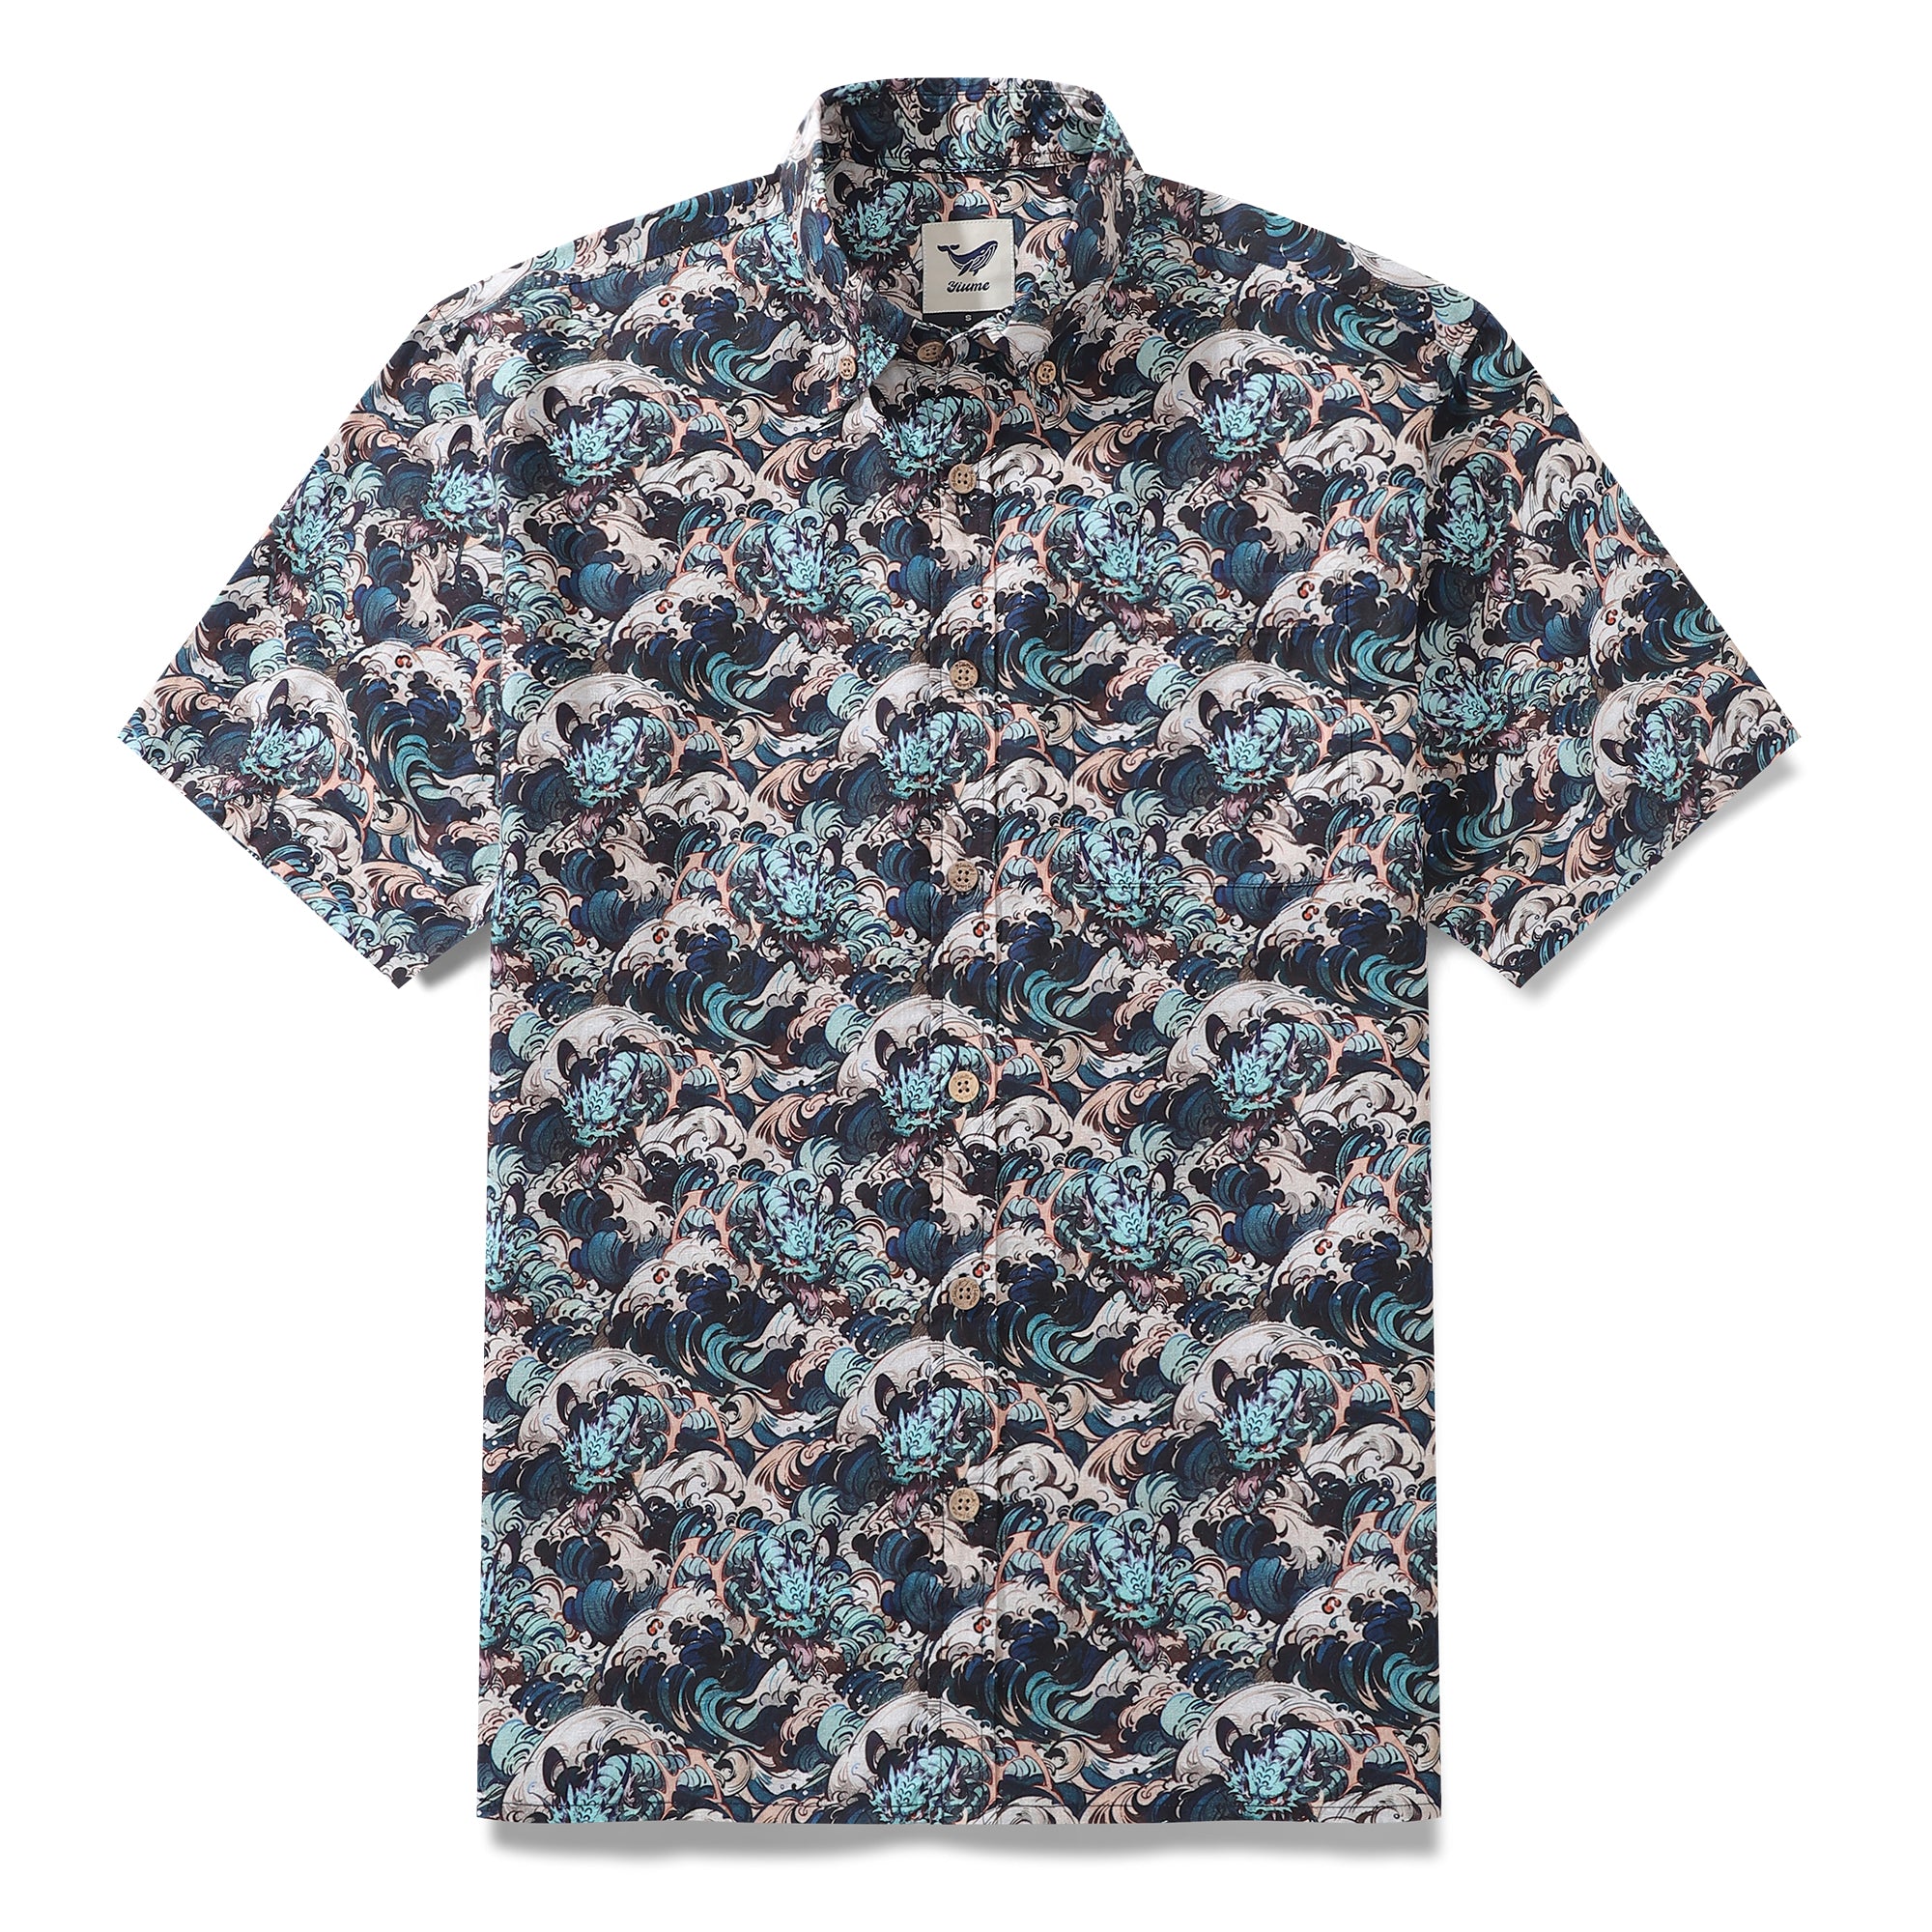 Men's Hawaiian Shirt Riding the Dragon's Wave Print Cotton Button-down Short Sleeve Aloha Shirt